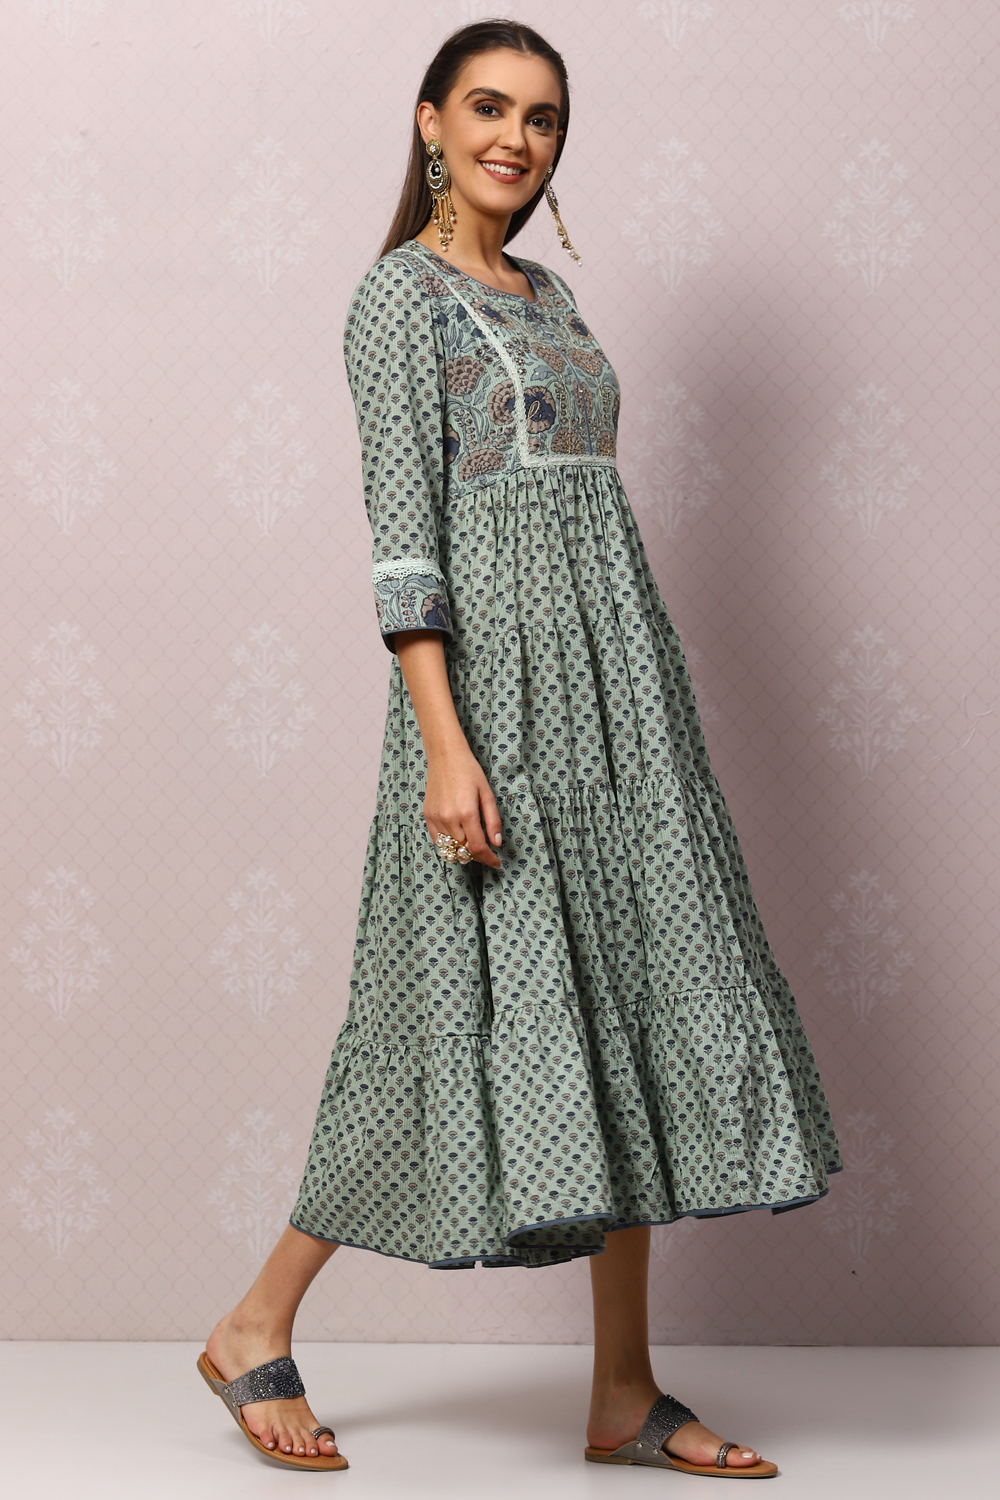 Buy Green Cotton Flared Printed Kurta Dress for INR1799.50 |Biba India